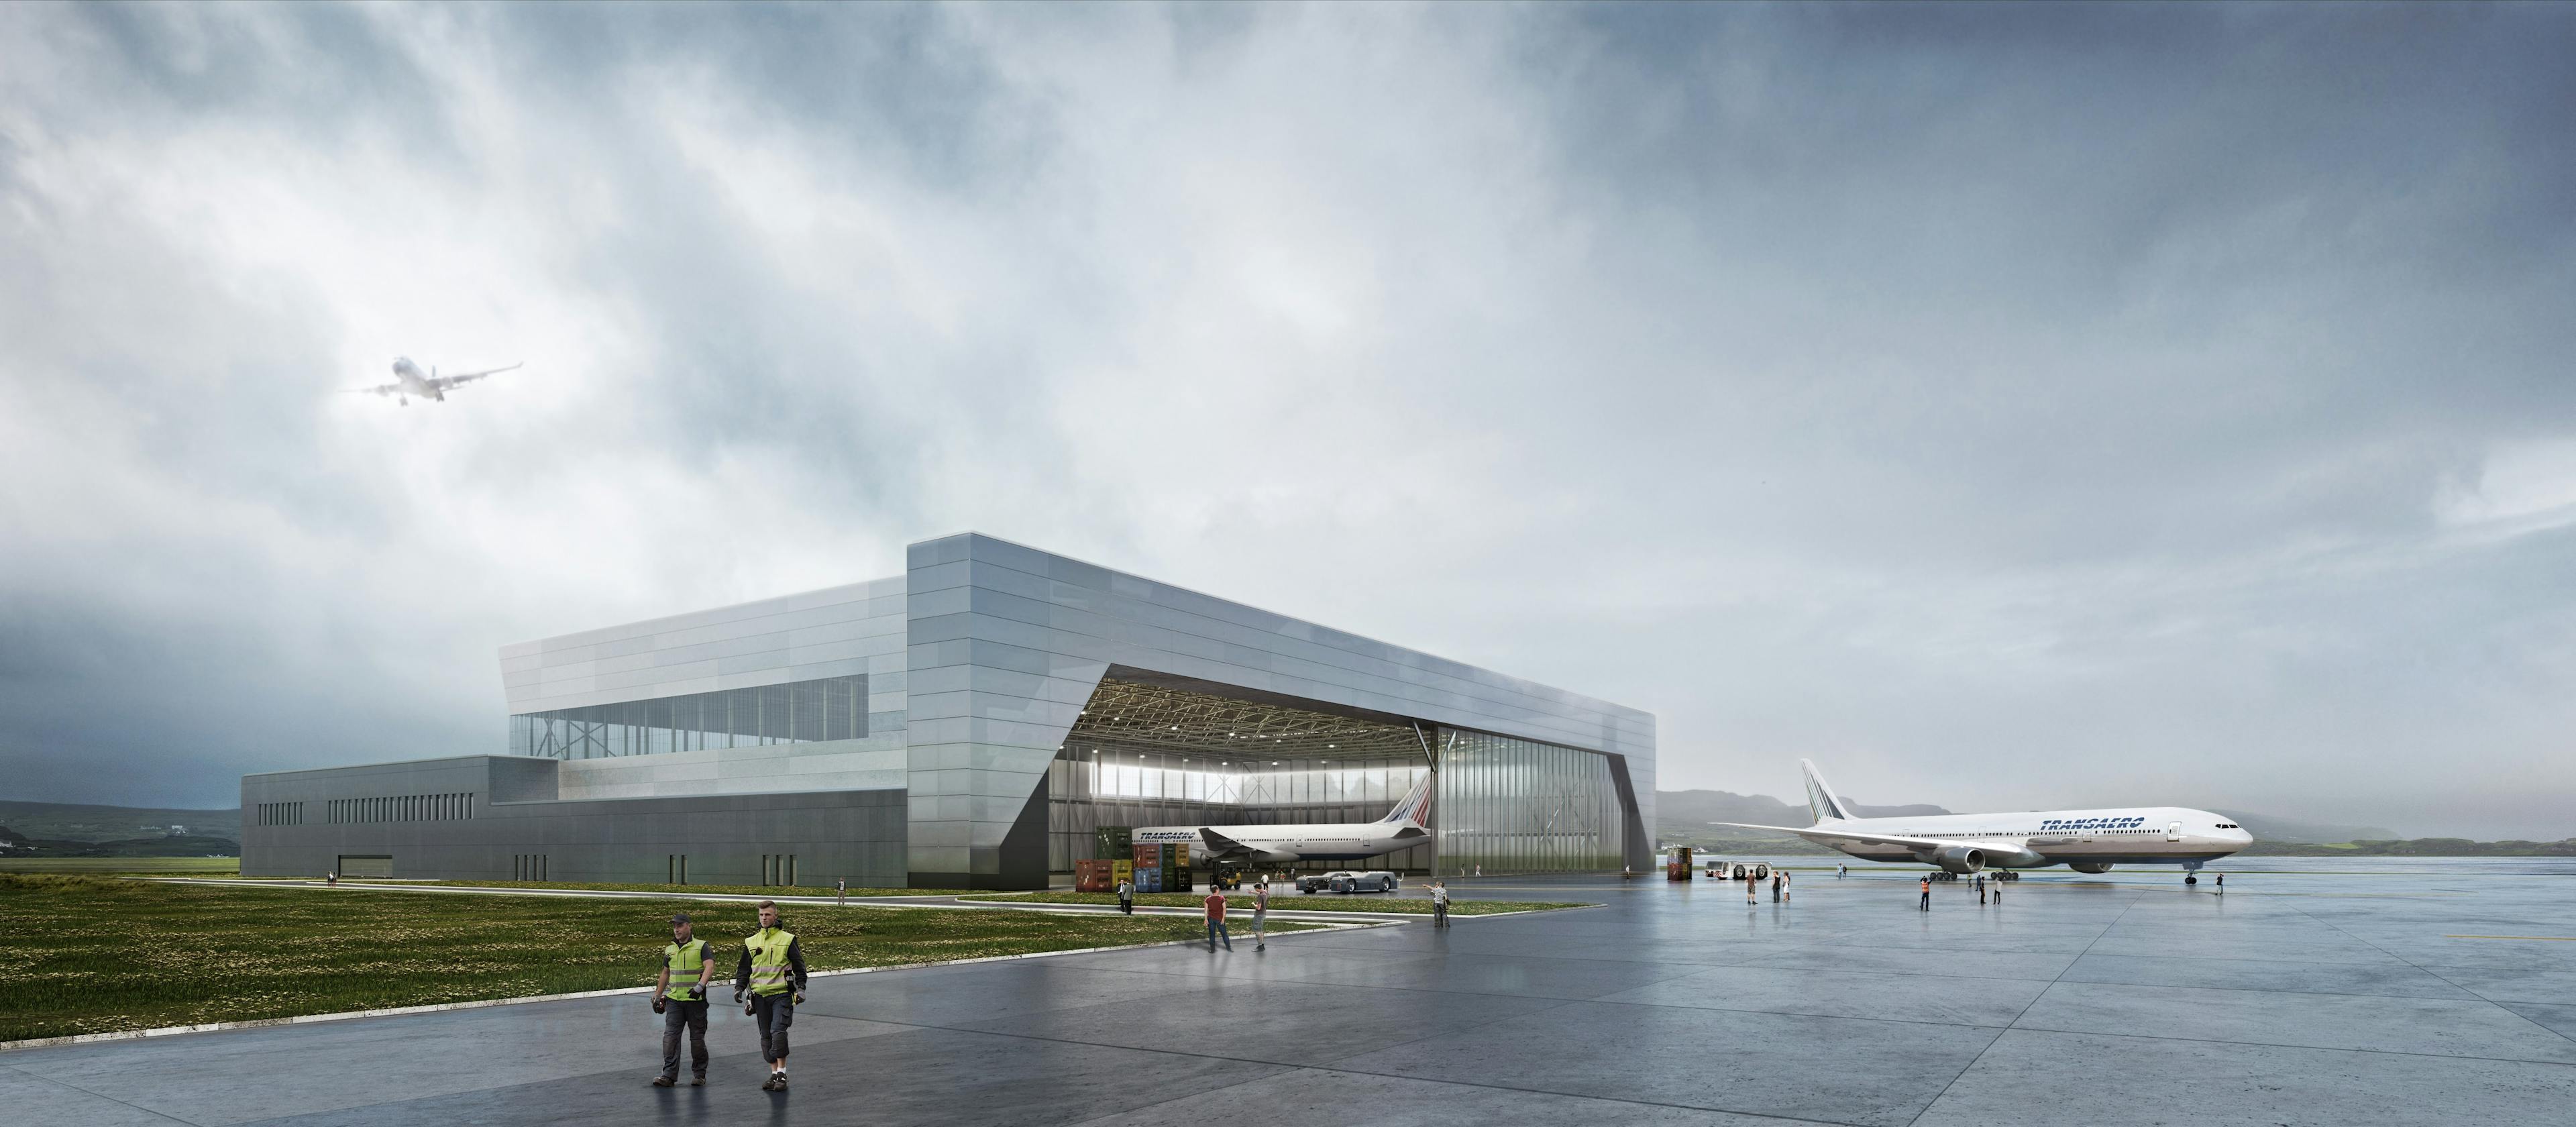 Rzeszów Airport - Architecture modelling, terrain preparation, 3D visualization, postproduction